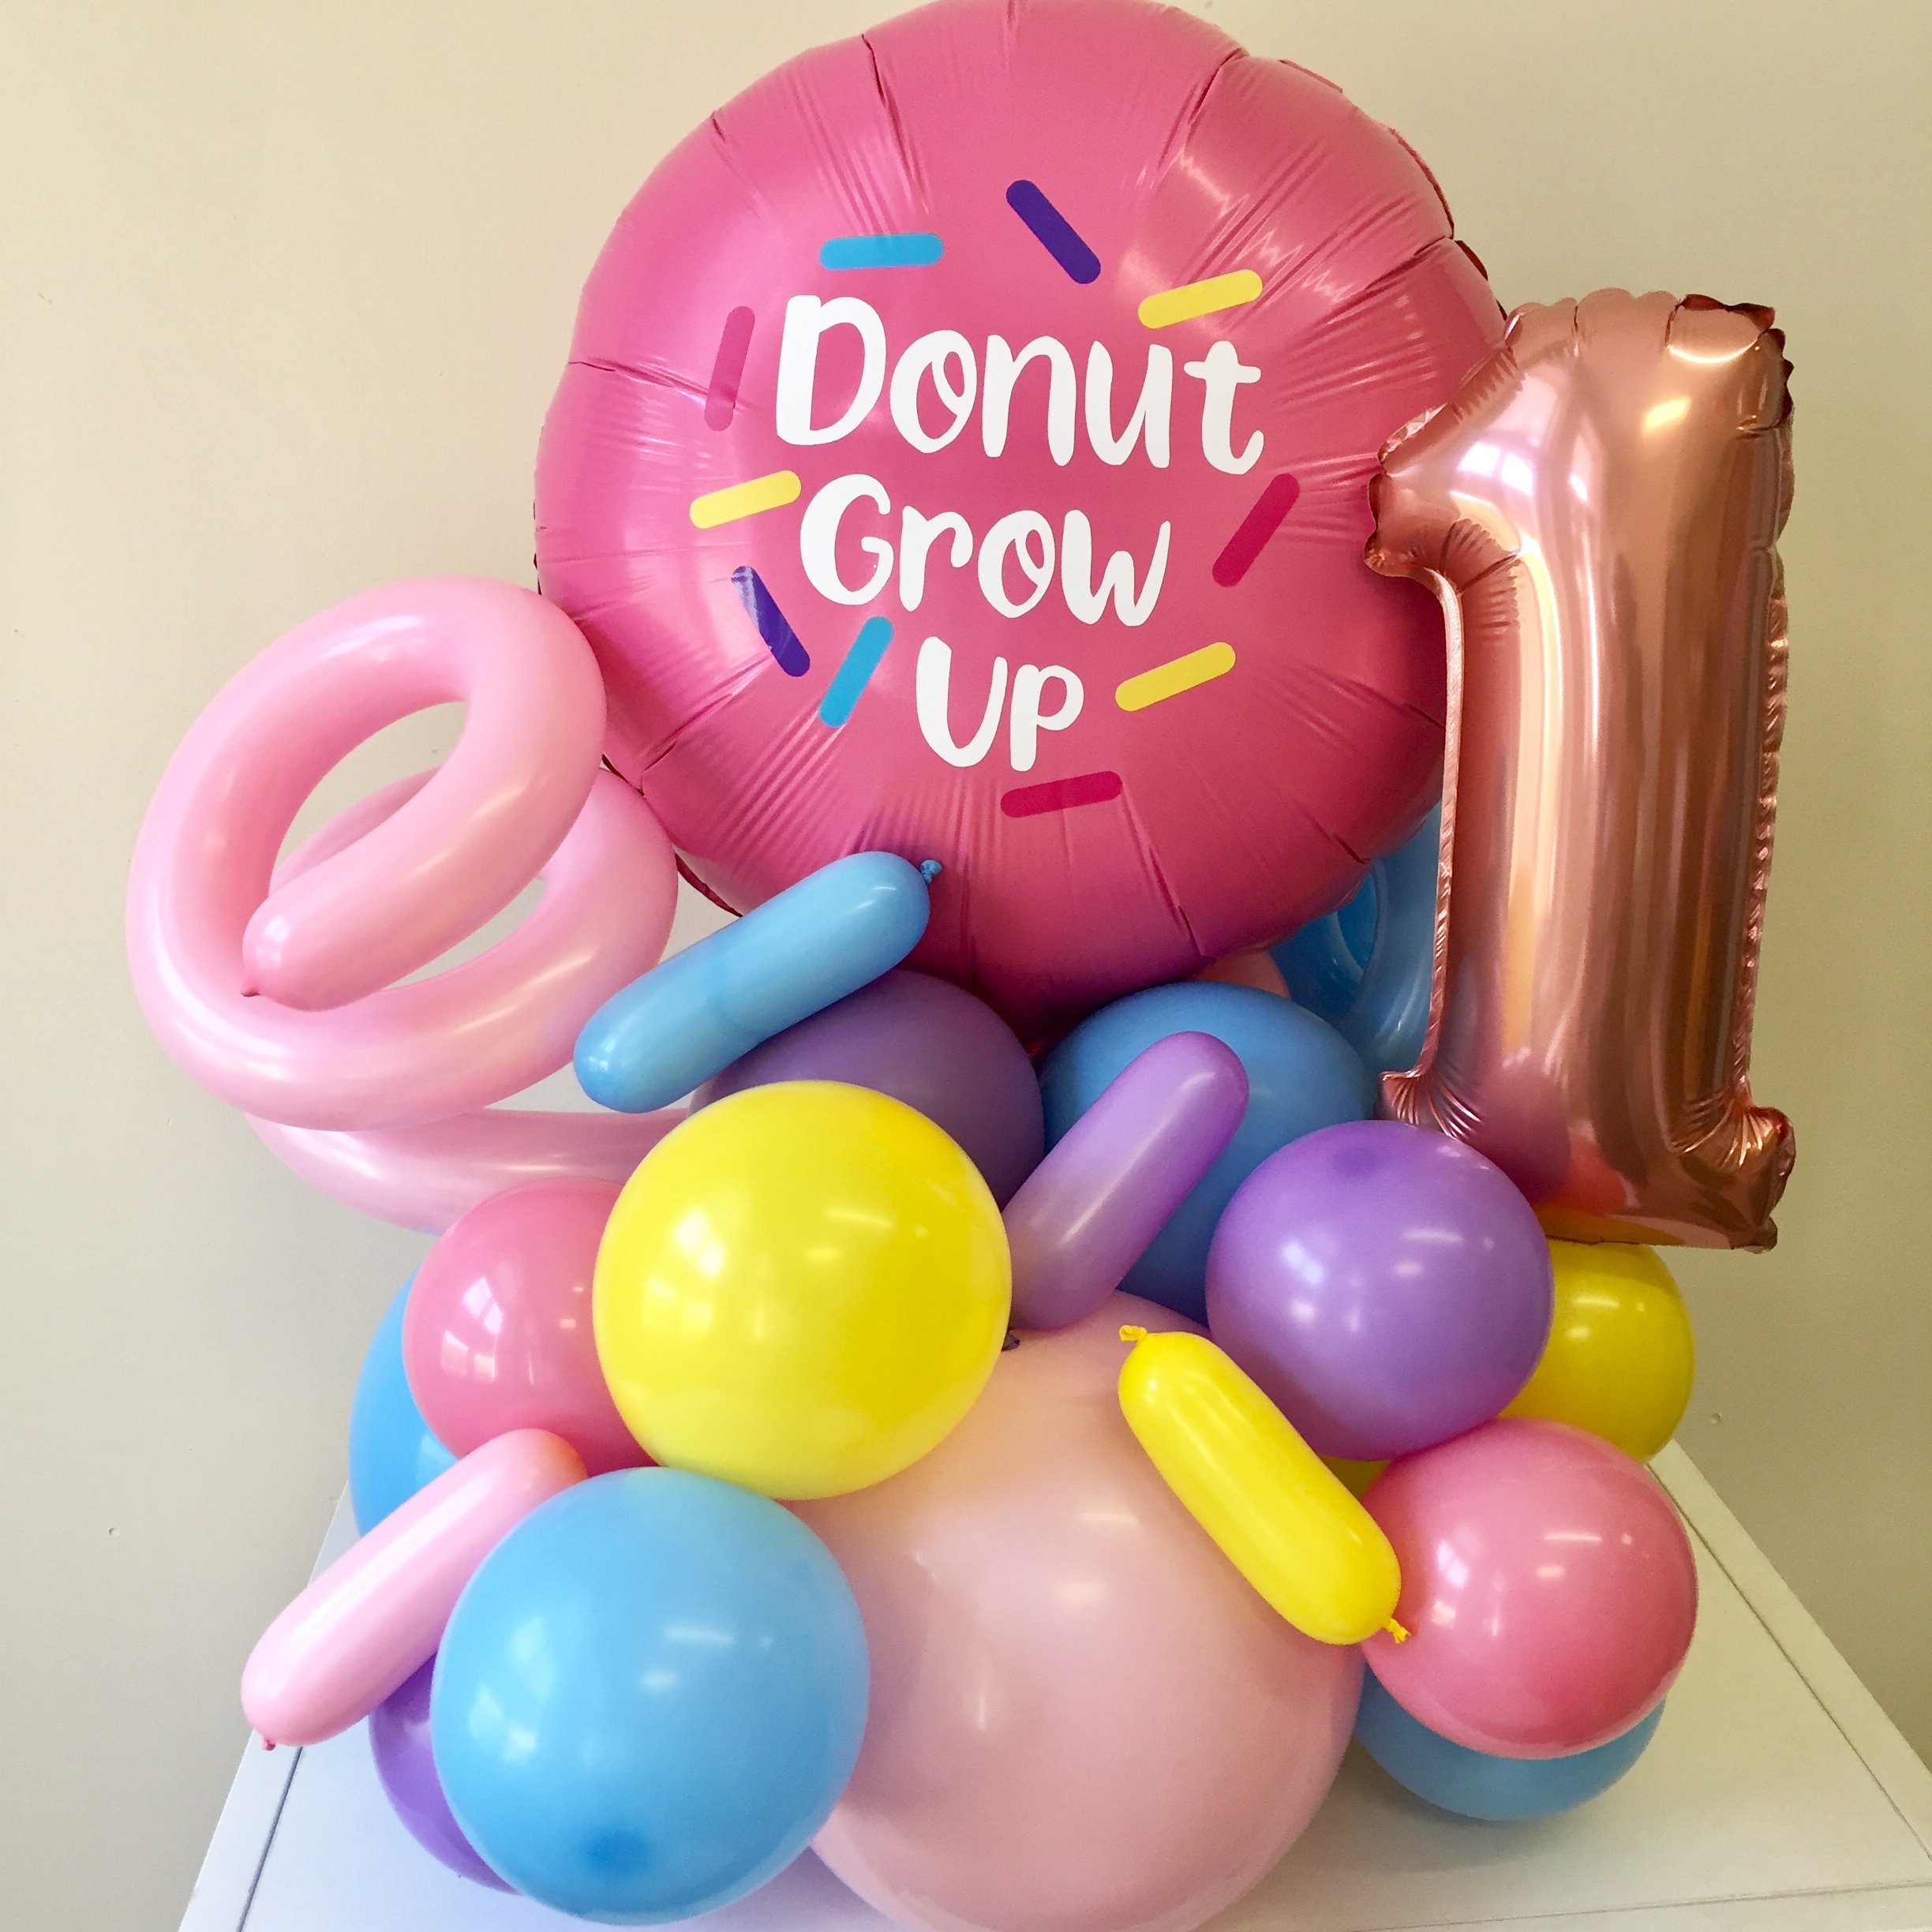 Donut Grow Up Balloon.jpeg